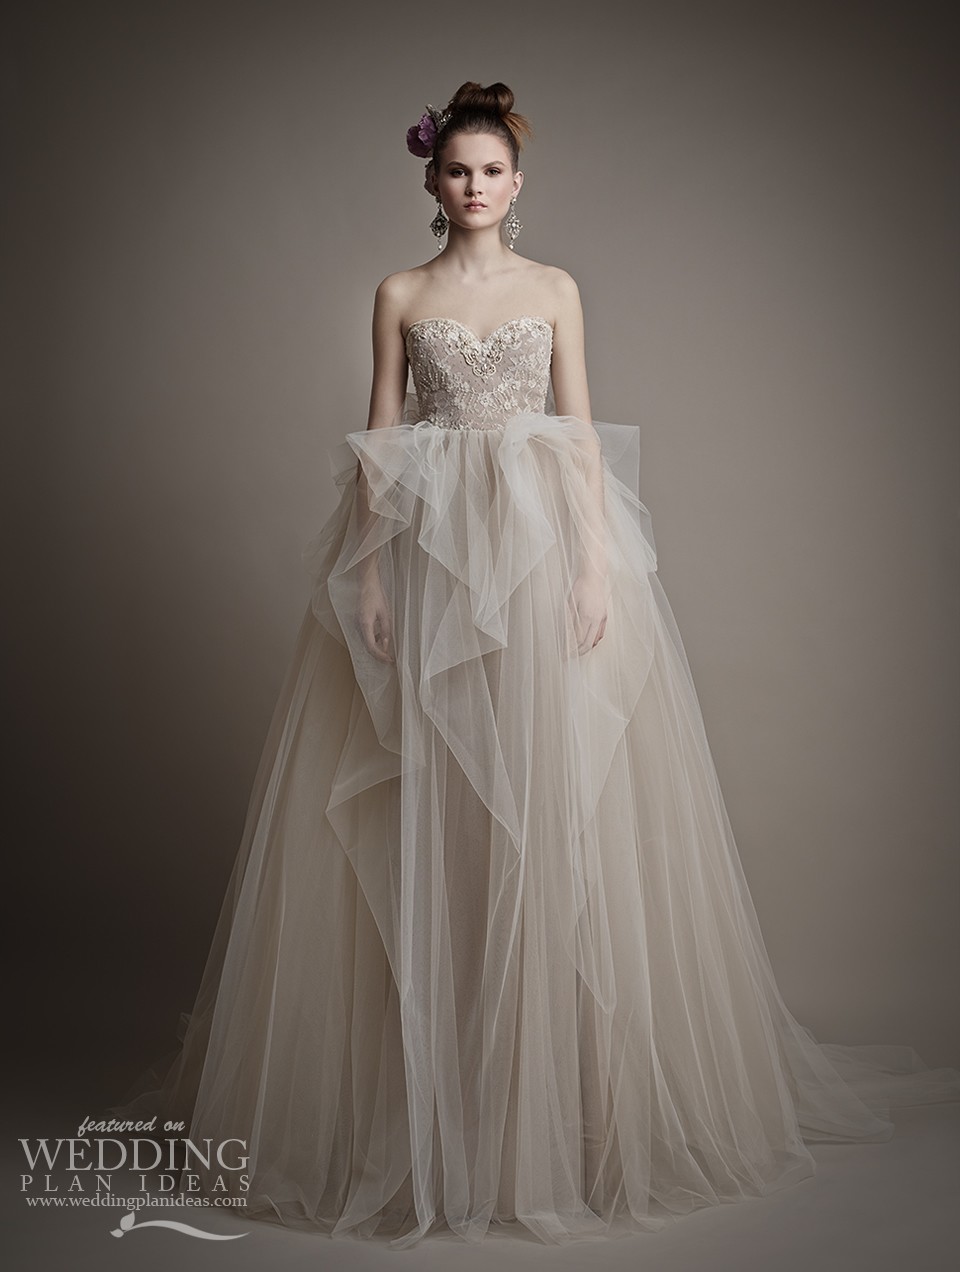 Sweethearth Wedding Dress by Ersa Atelier